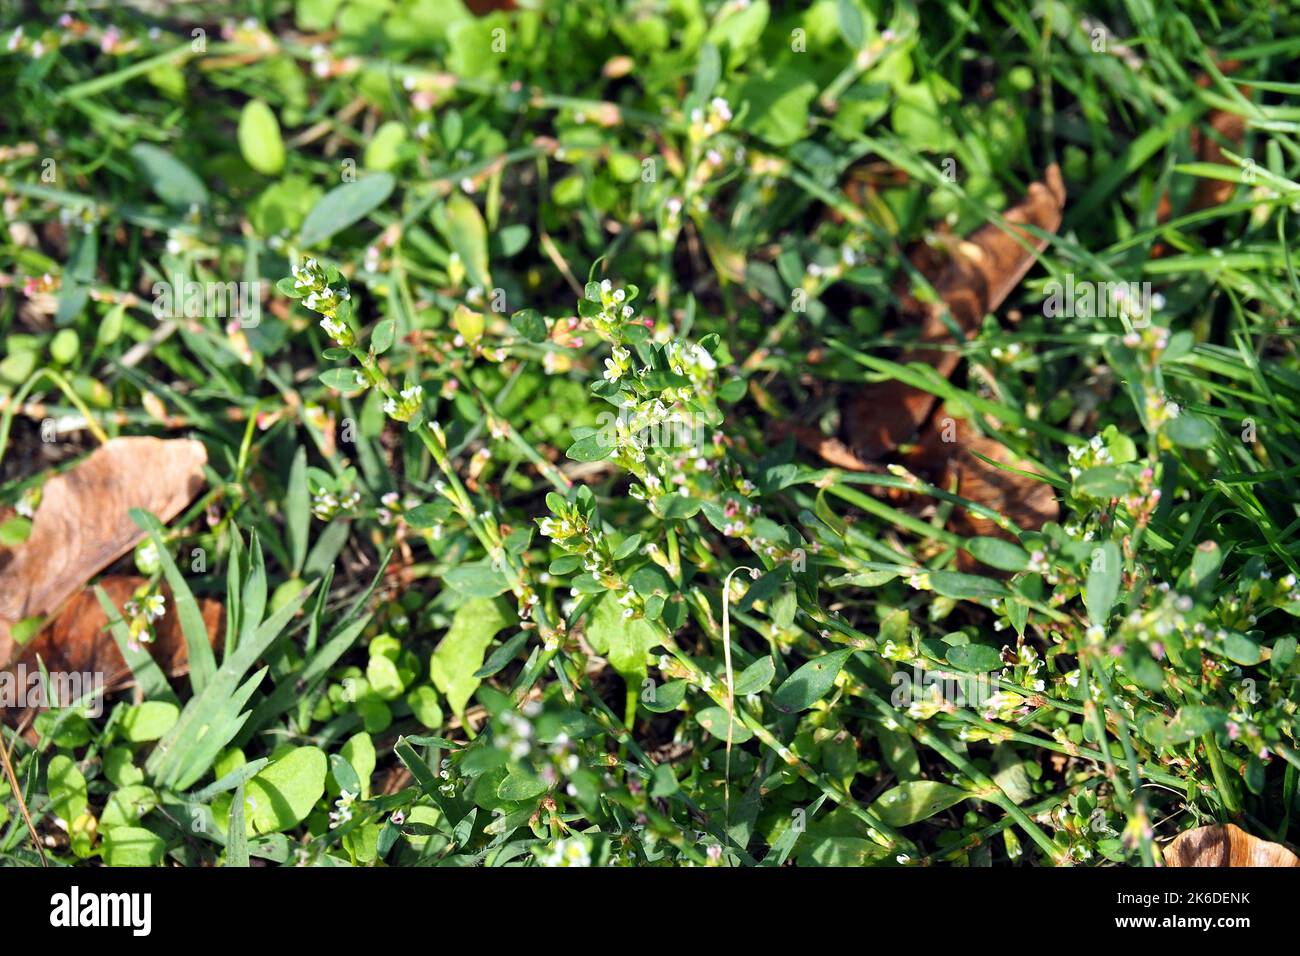 common knotgrass, Vogelknöterich, Renouée des oiseaux, Polygonum aviculare, madárkeserűfű, Hungary, Budapest, Magyarprszág, Europe Stock Photo